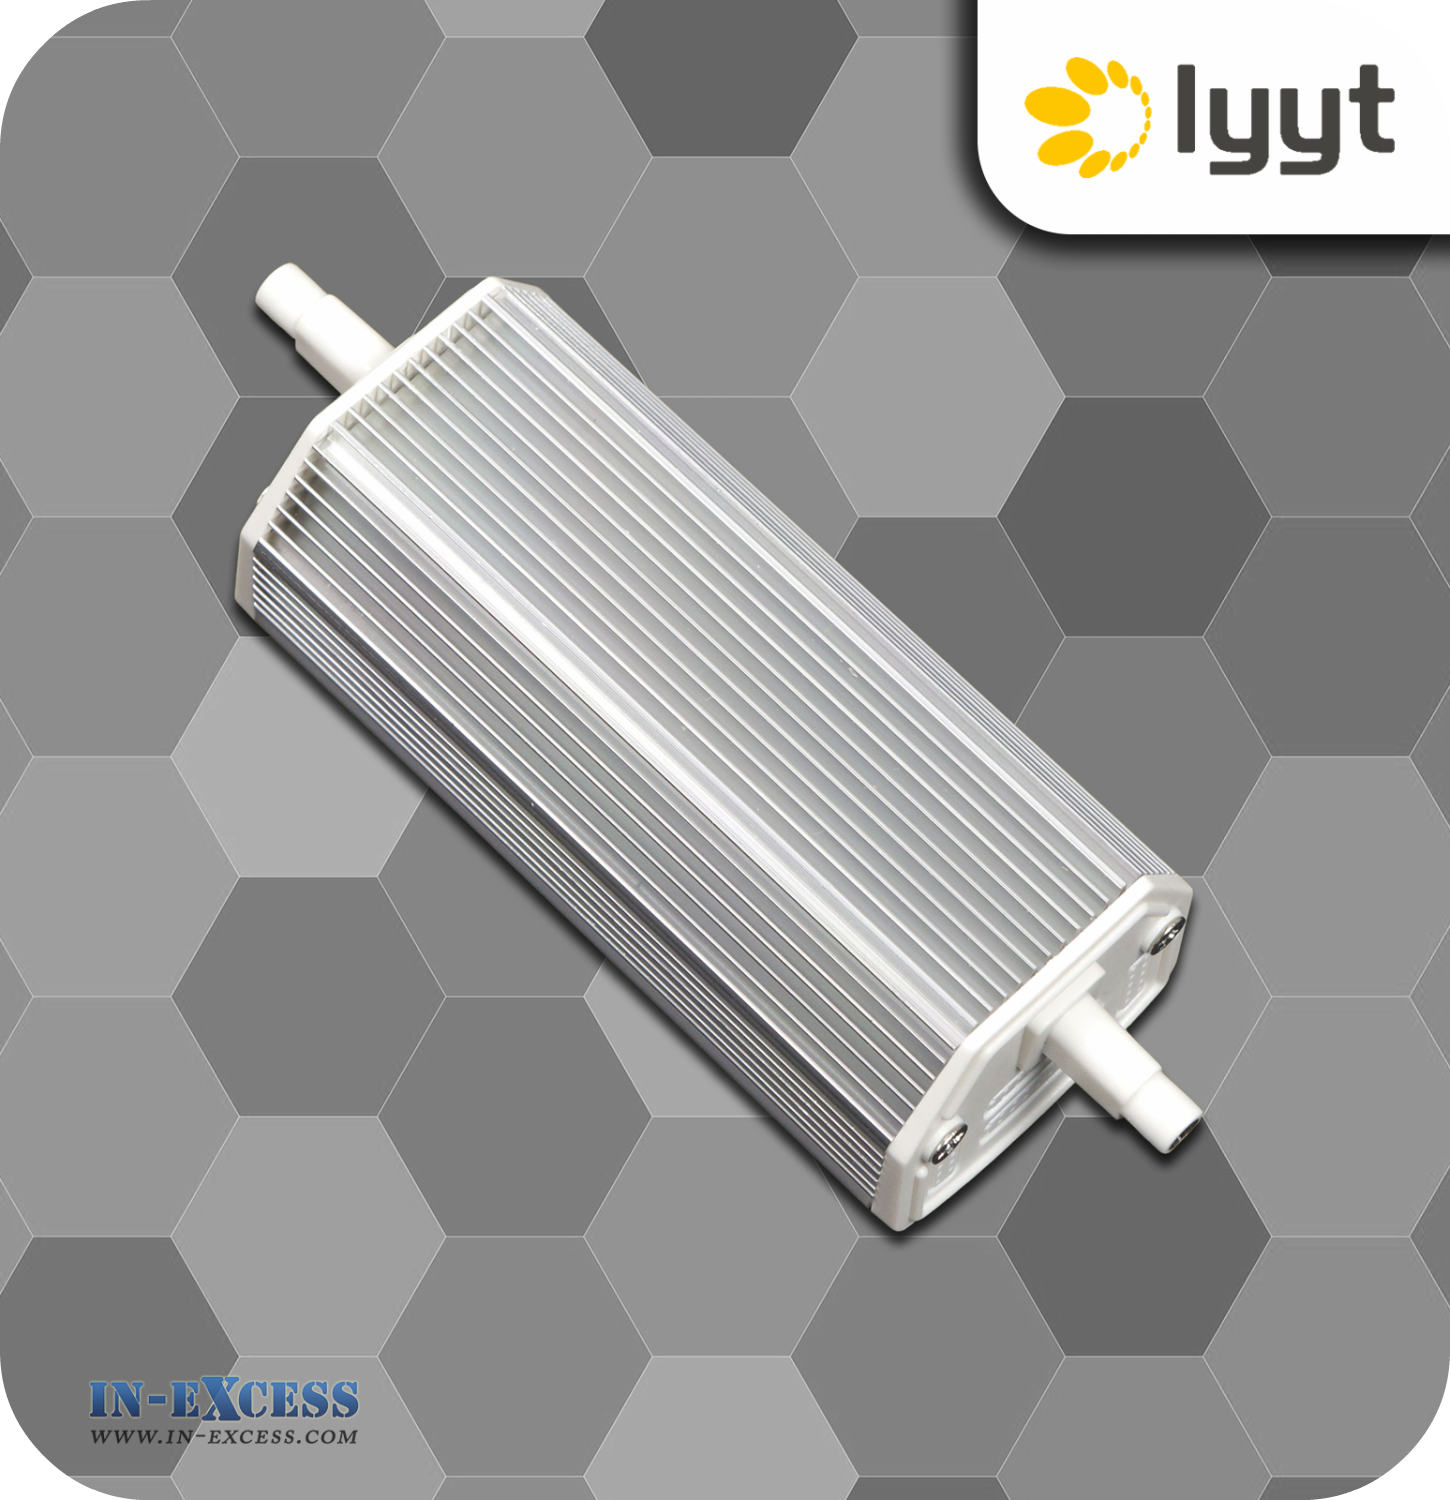 Lyyt LED Flood Light Lamp 12W - R7S 135mm